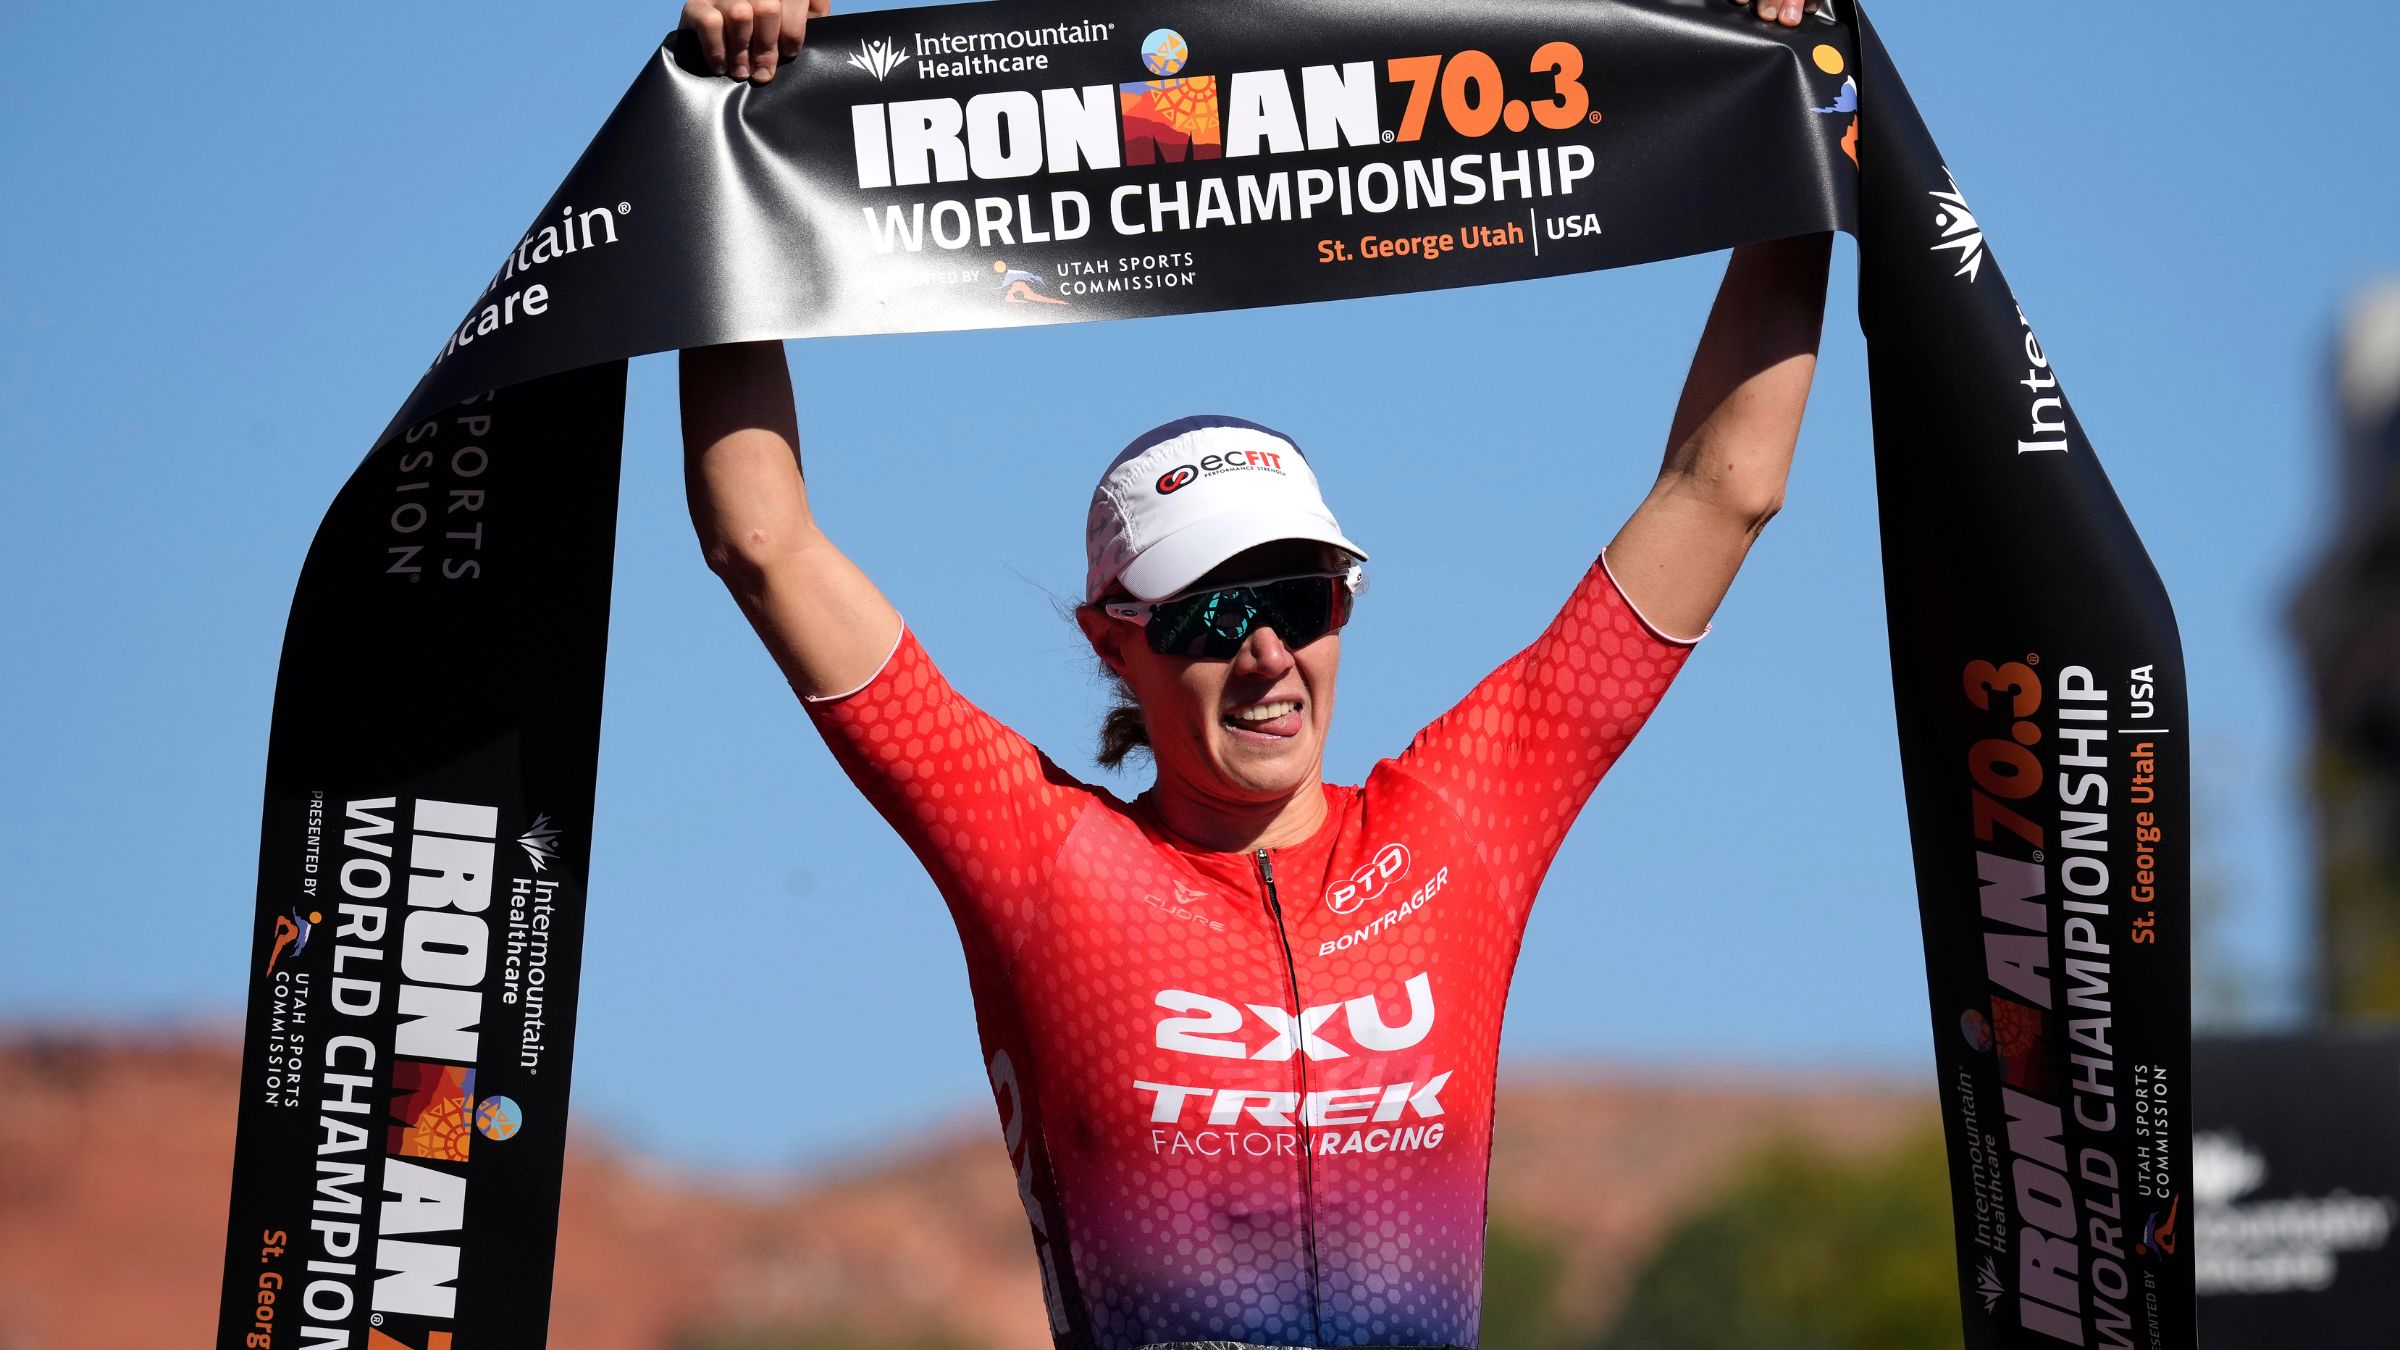 Taylor Knibb wins Ironman 70.3 World Championship St. George